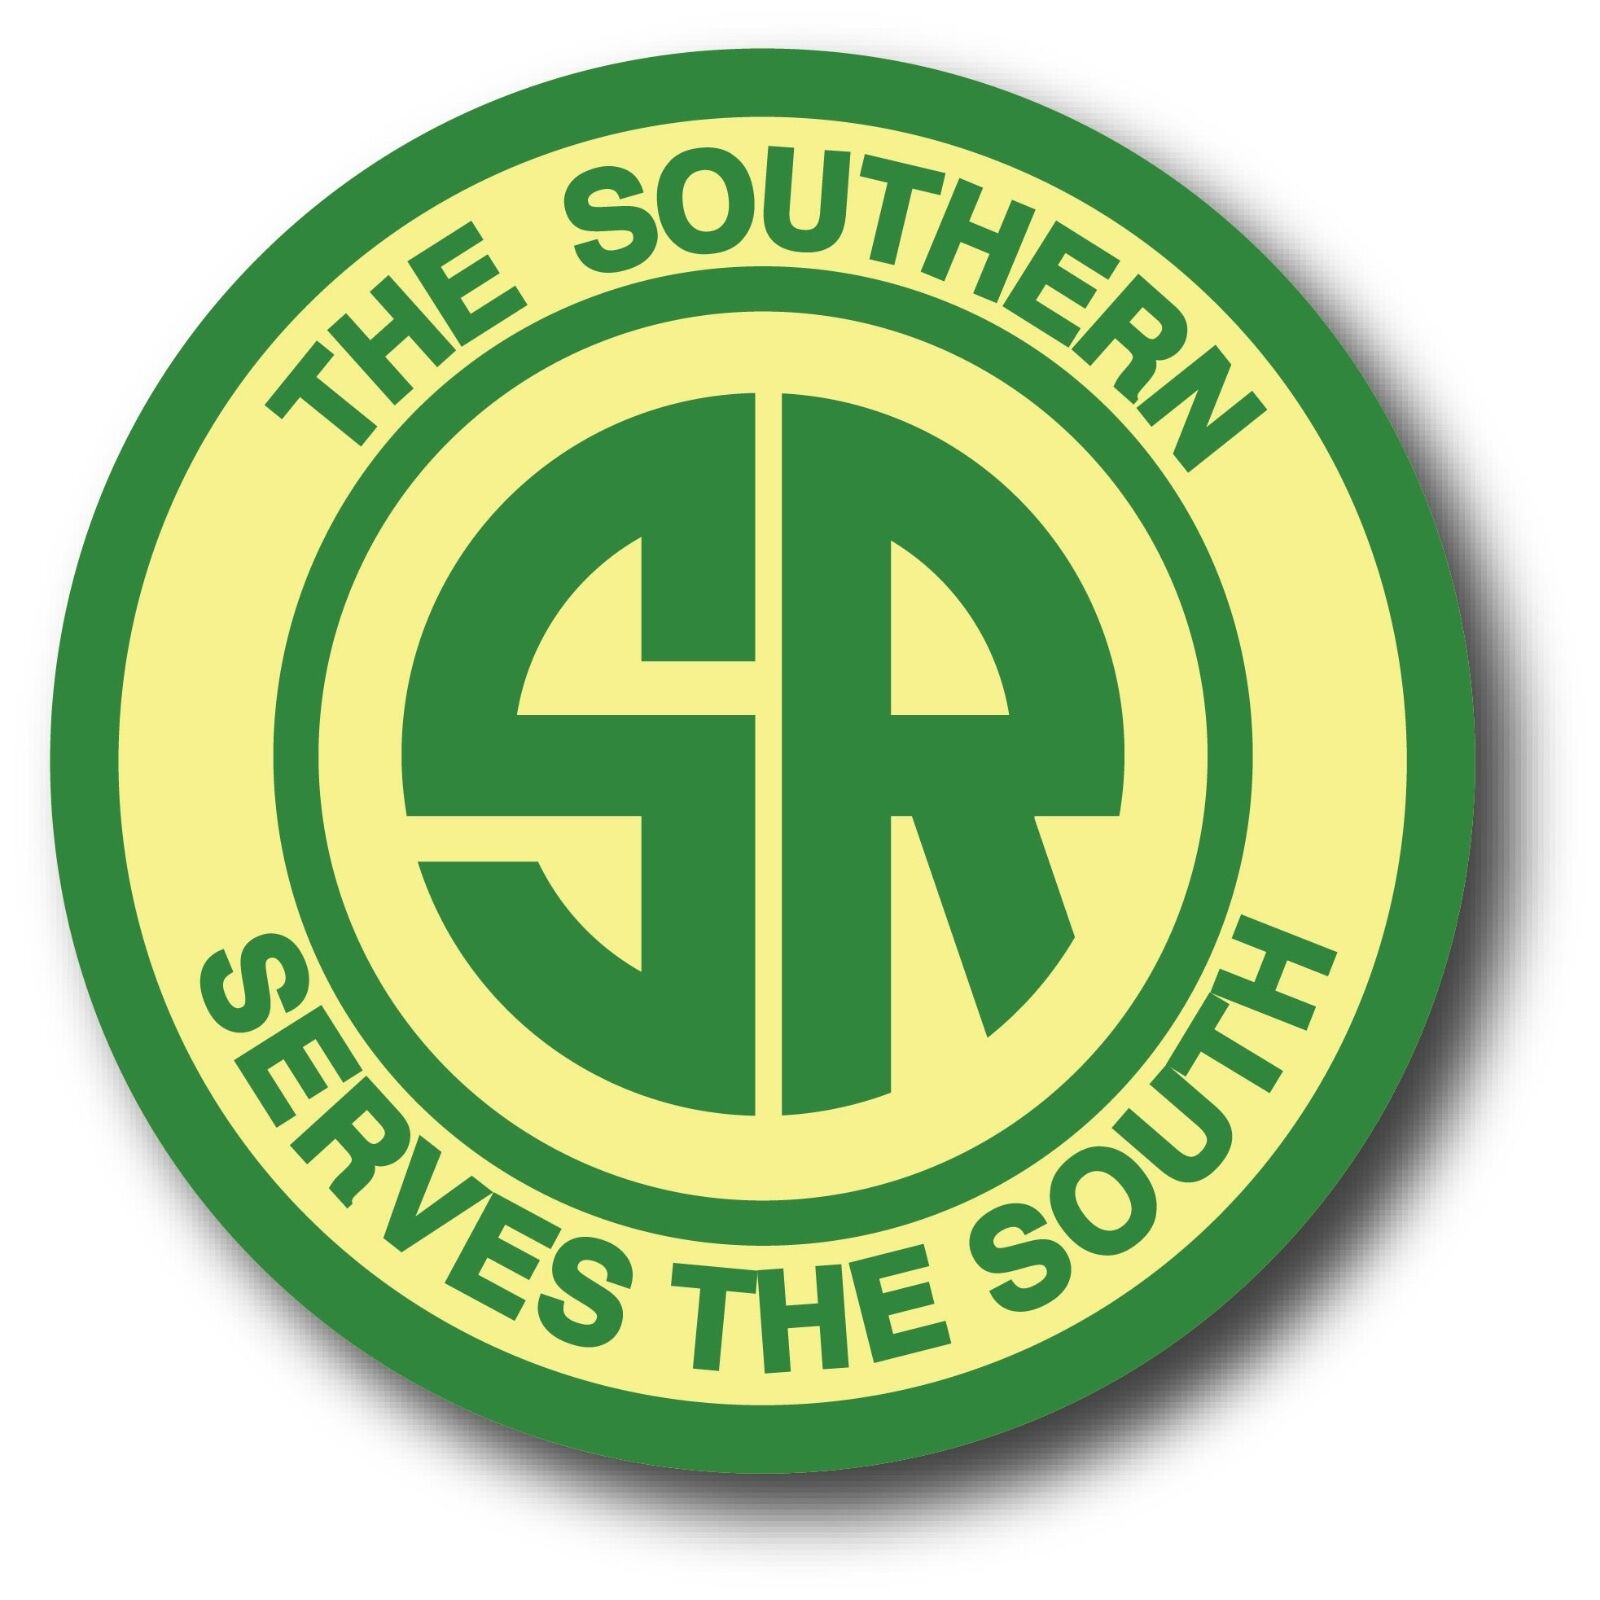 Southern Railroad Vintage Railroad Railway Car Window Decal Bumper Vinyl Sticker